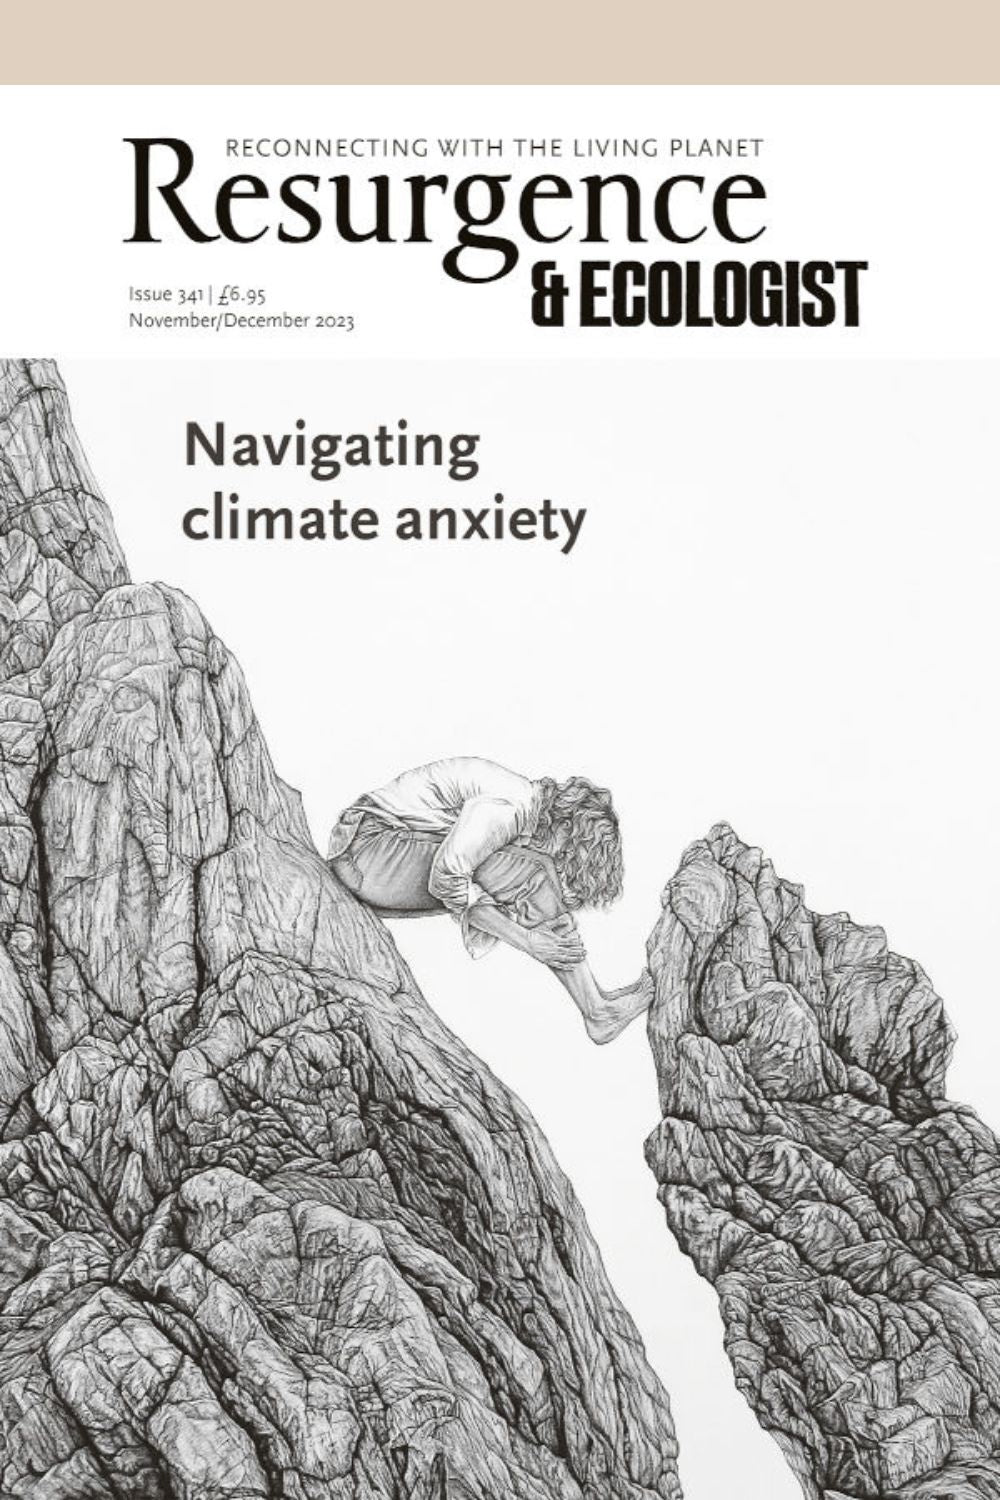 Resurgence & Ecologist magazine cover: Issue 341